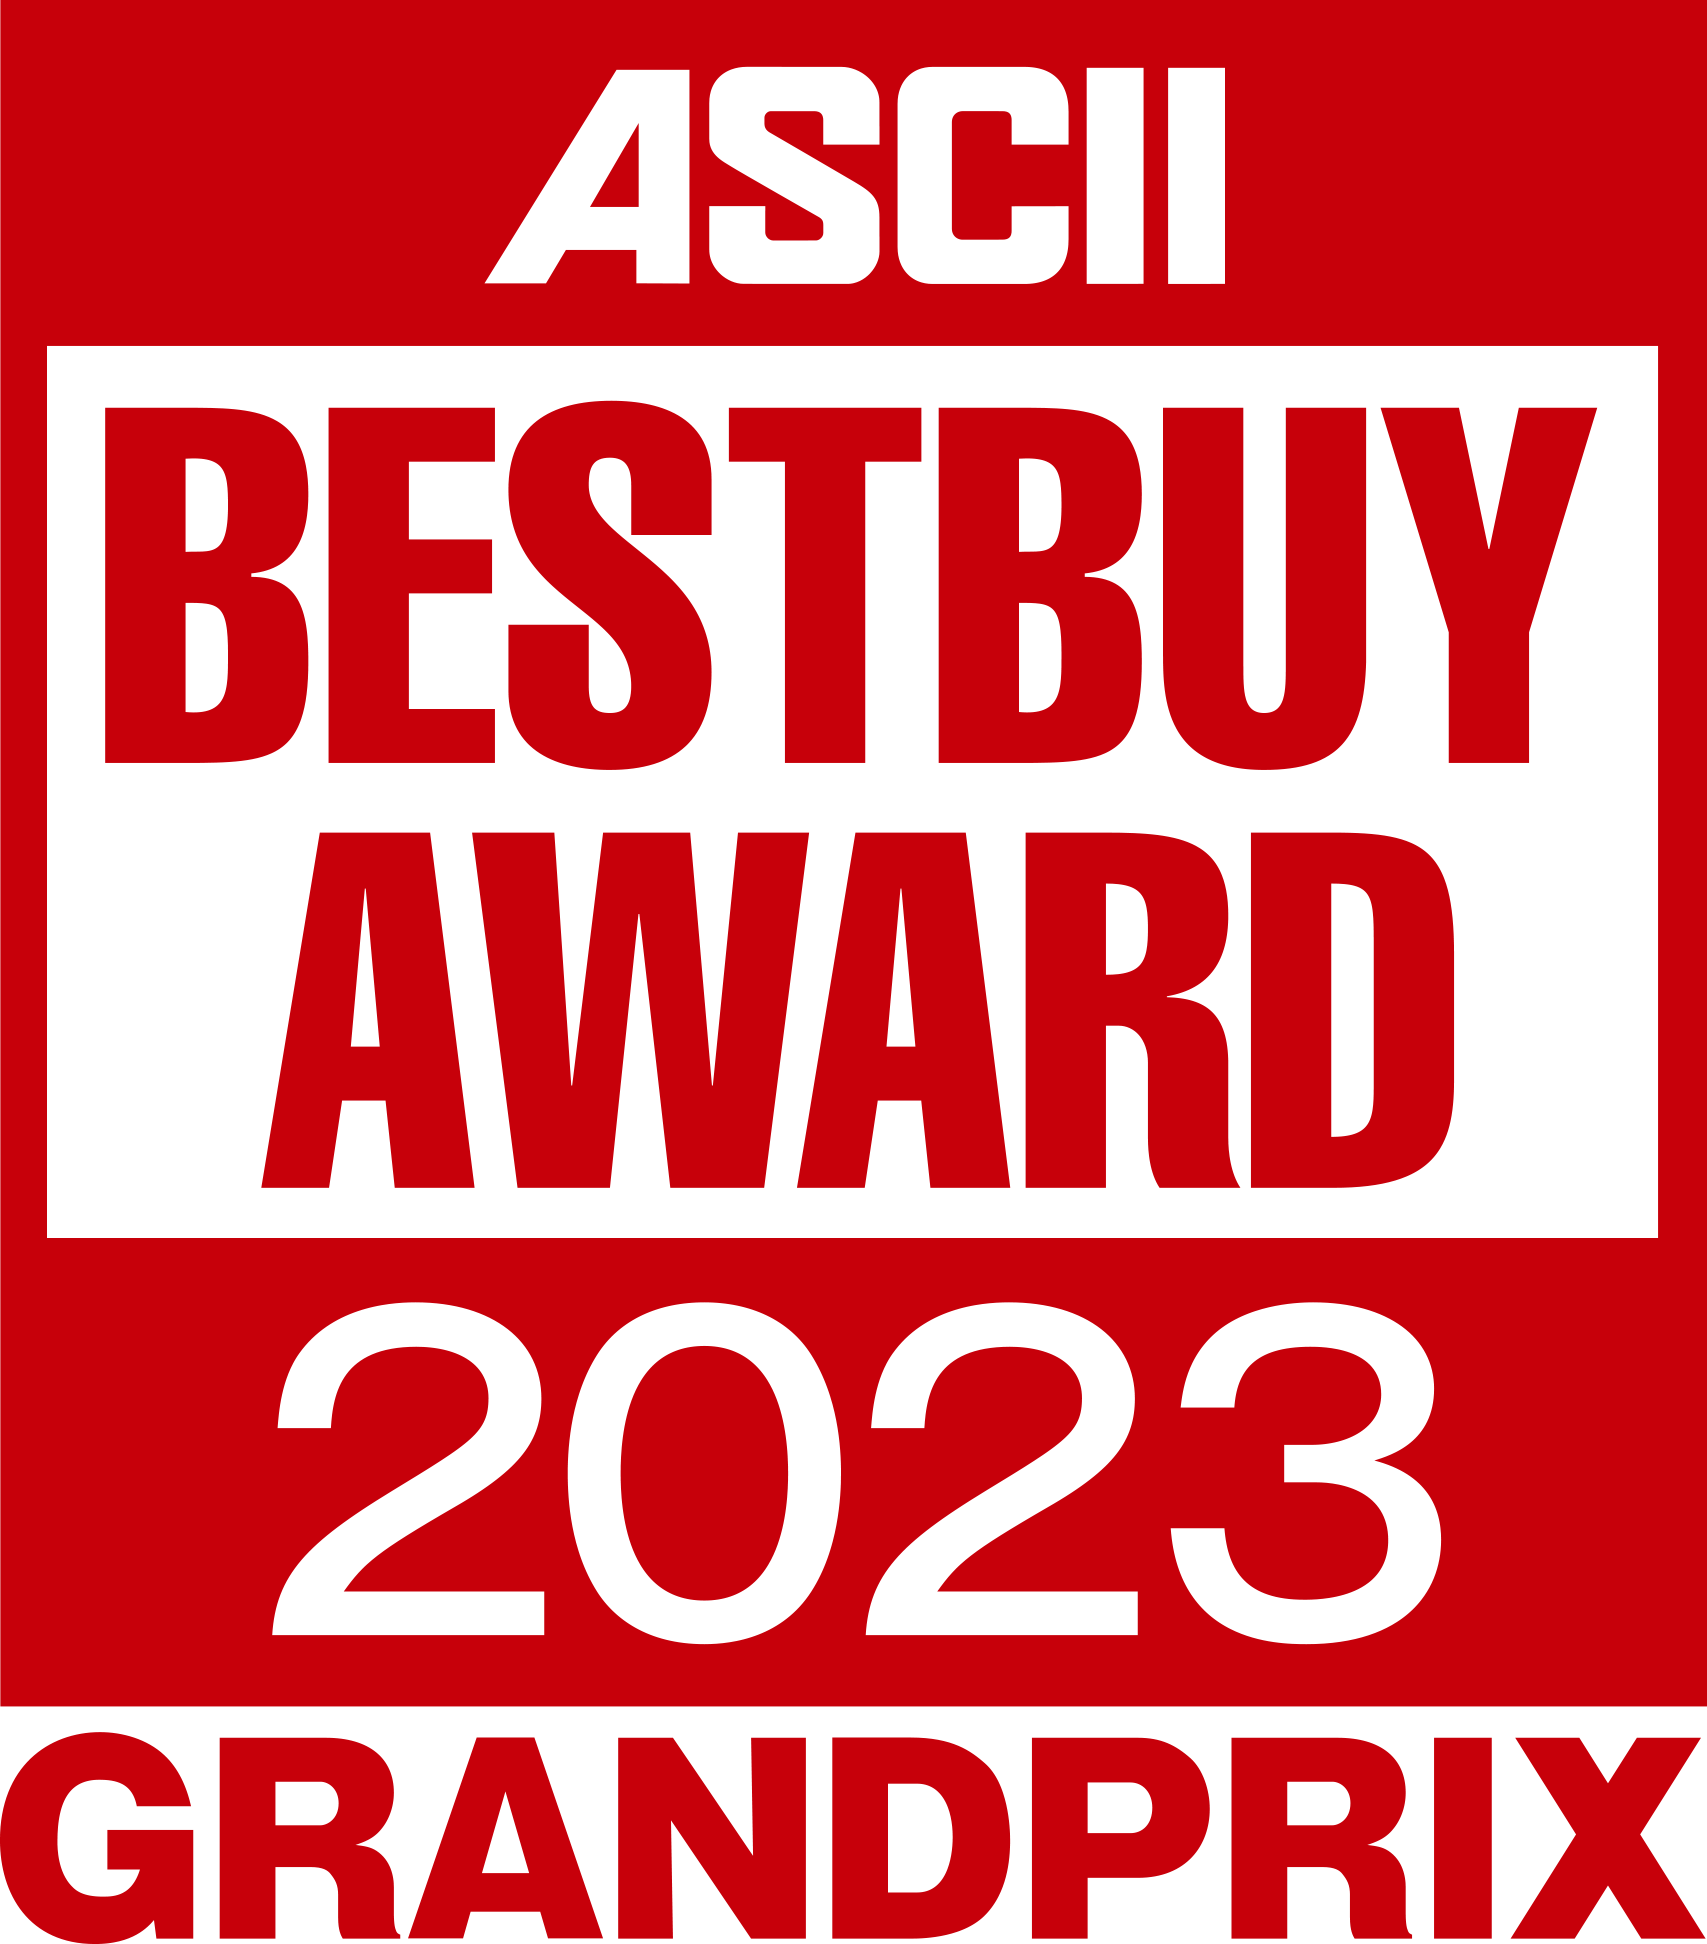 ASCII BESTBUY AWARD 2023 GRANDPRIX